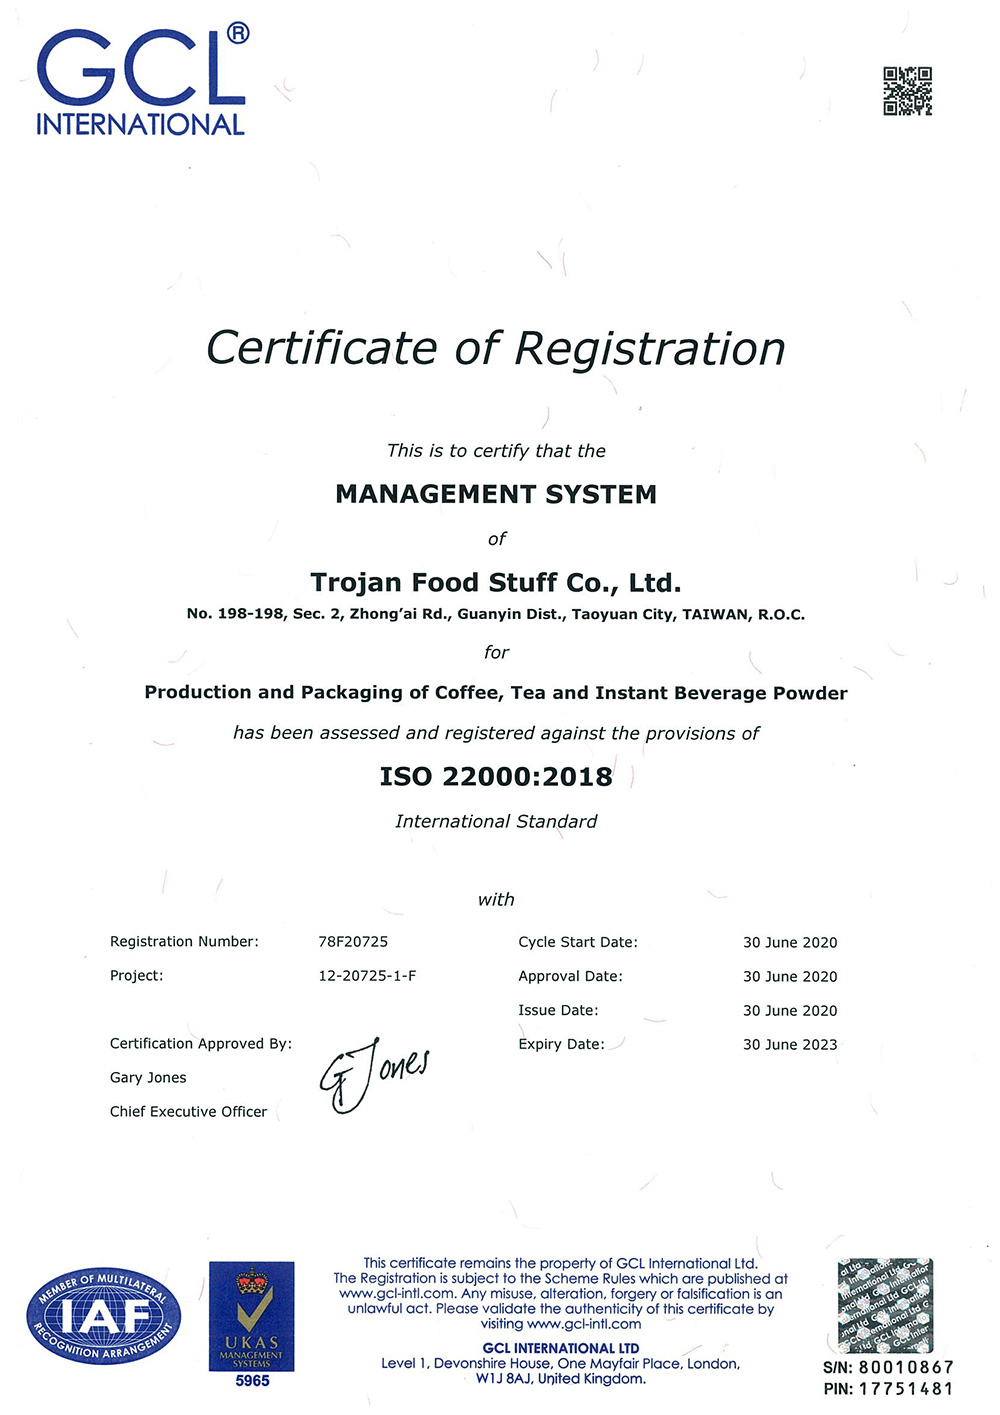 TROJAN2019年ISO-22000認証取得。